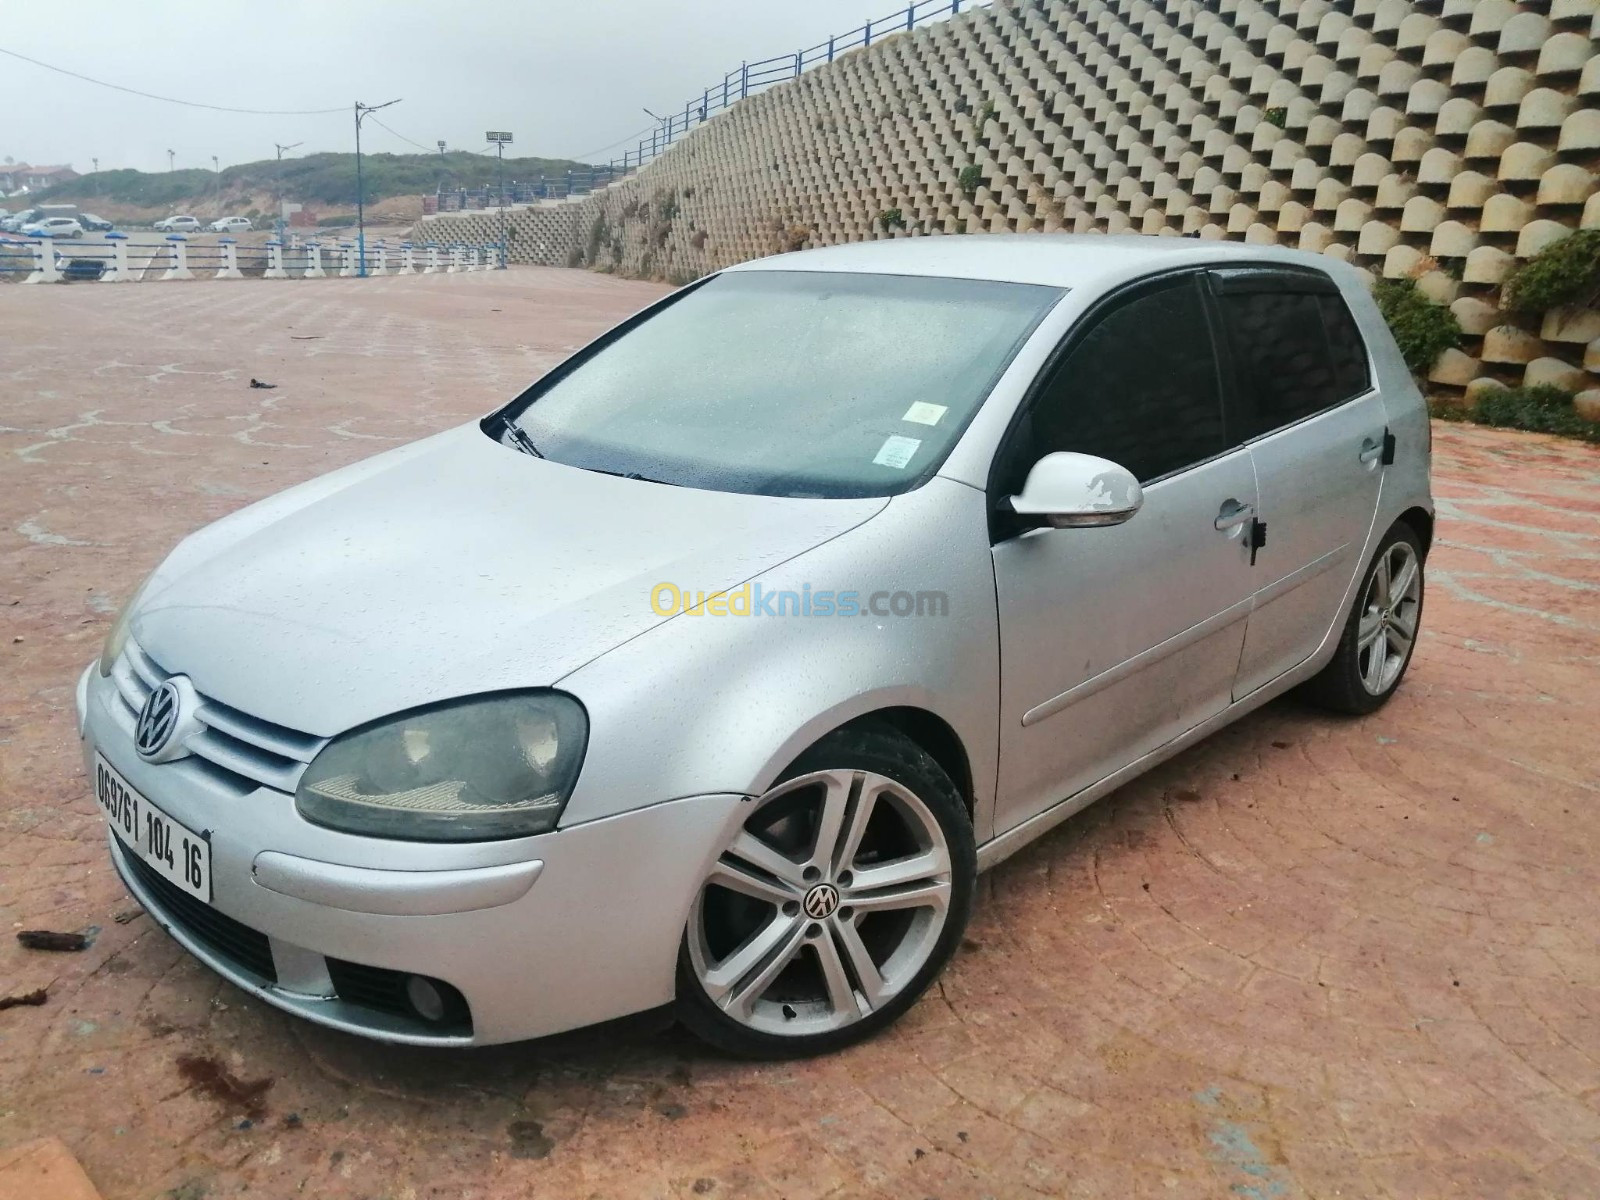 Volkswagen Golf 5 2004 Golf 5 - Alger Algérie